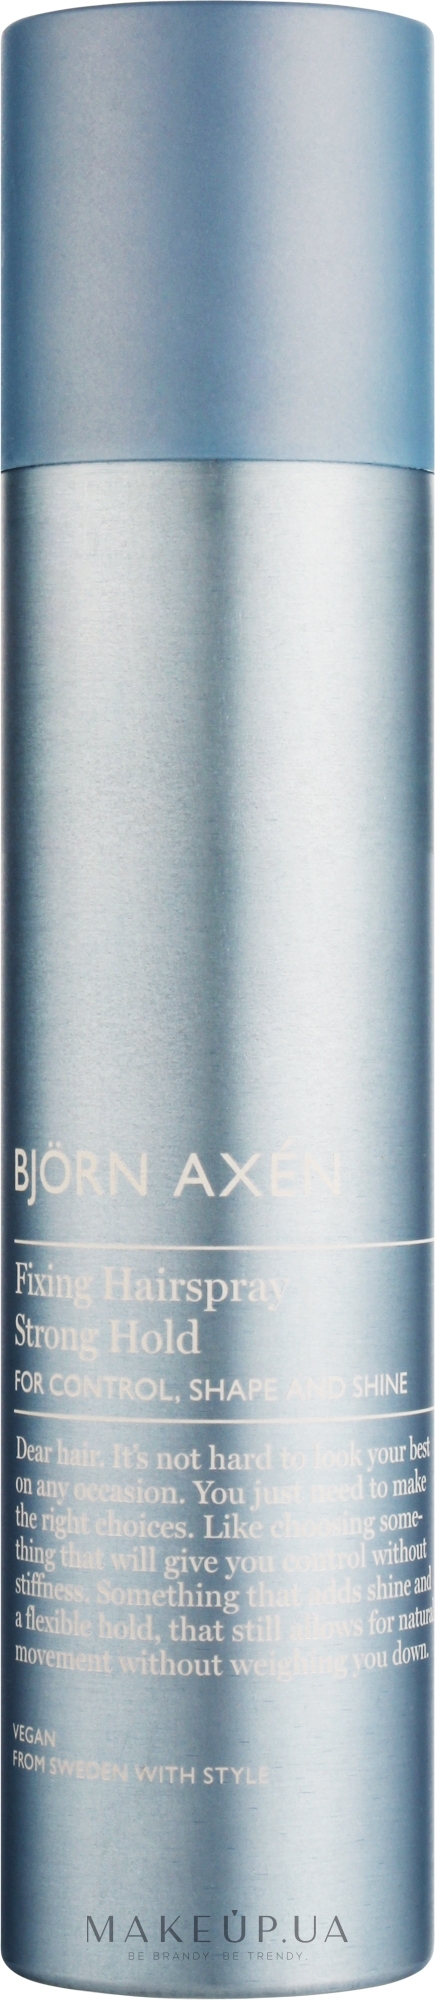 Лак для волос легкой фиксации - BjOrn AxEn Fixing Hairspray Strong Hold  — фото 250ml